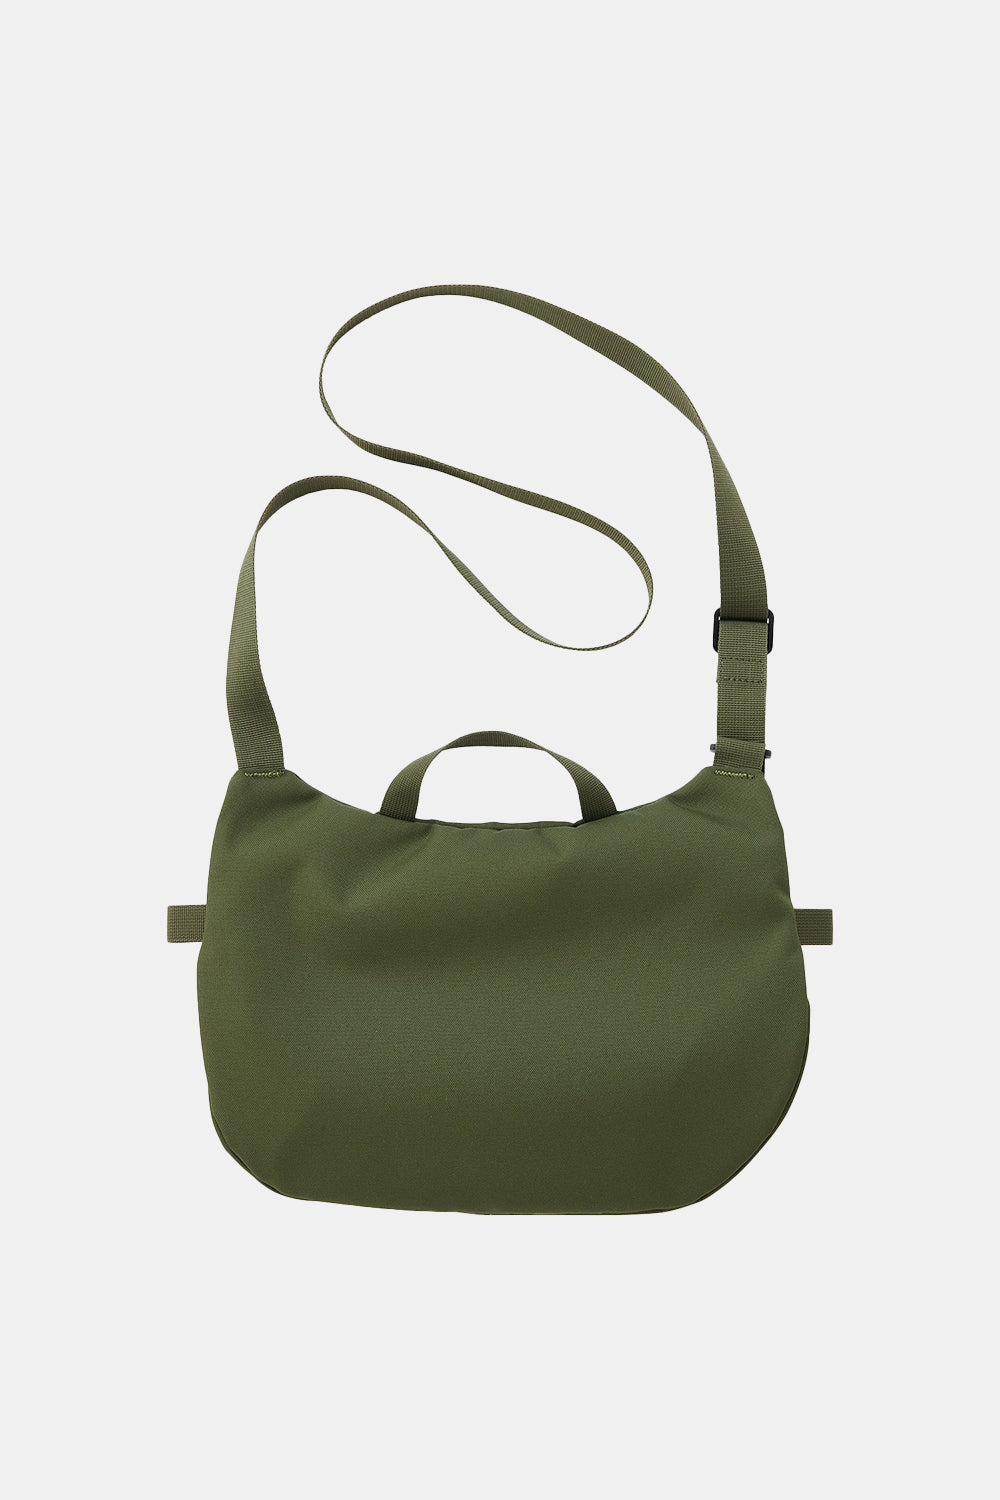 Gramicci Cordura Shoulder Bag (Olive Drab)